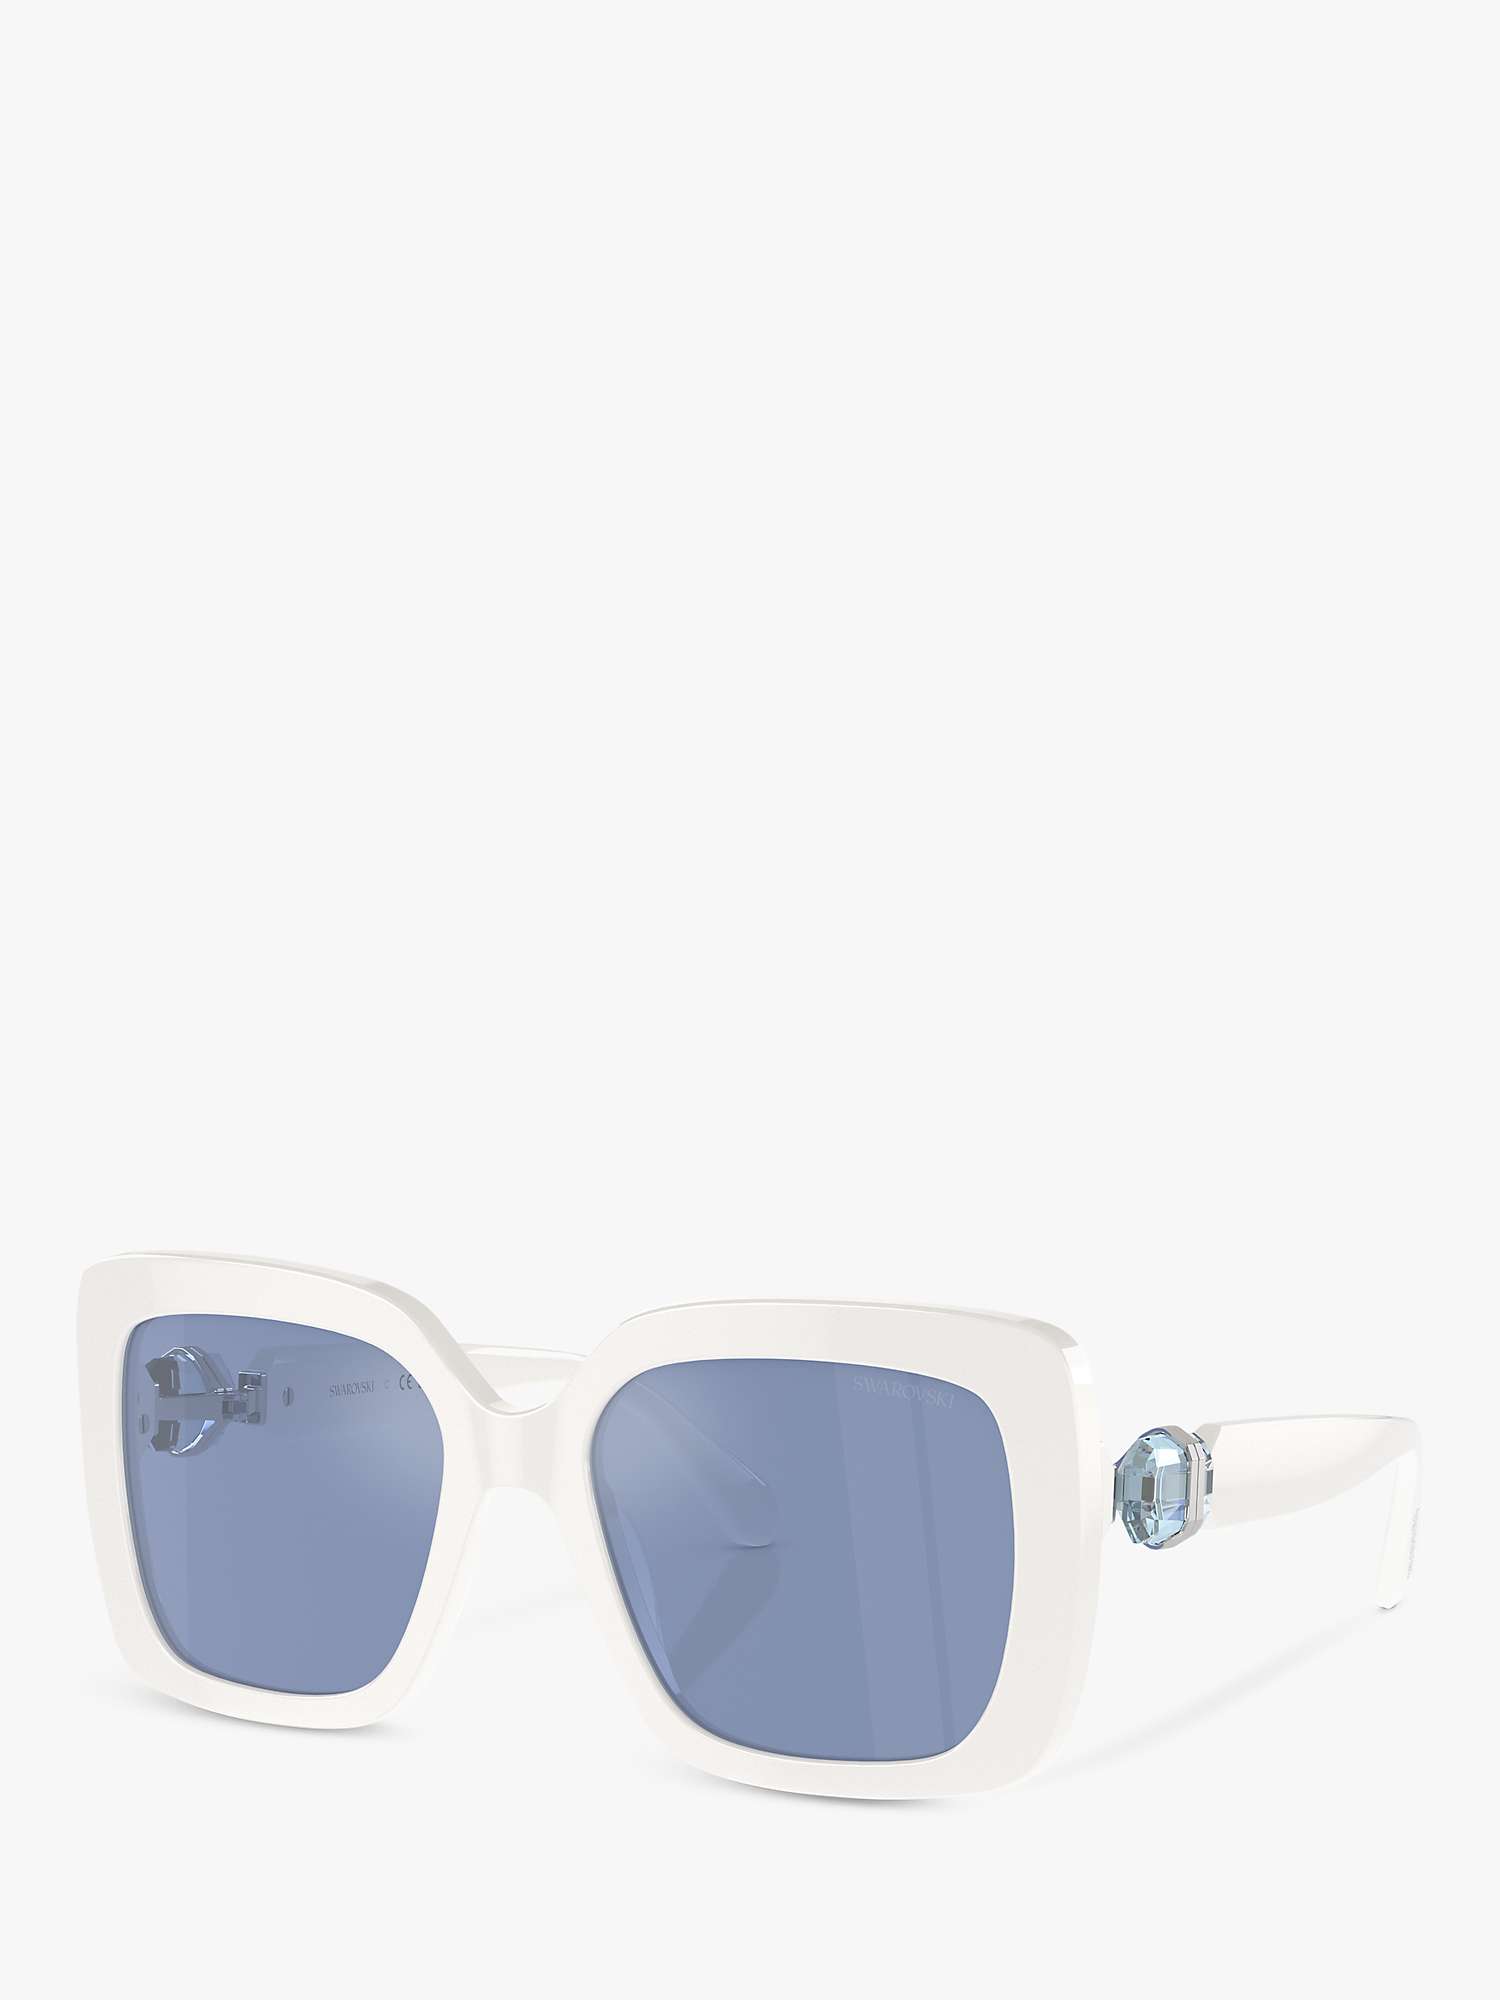 Buy Swarovski SK6001 Women's Square Sunglasses, White/Blue Online at johnlewis.com